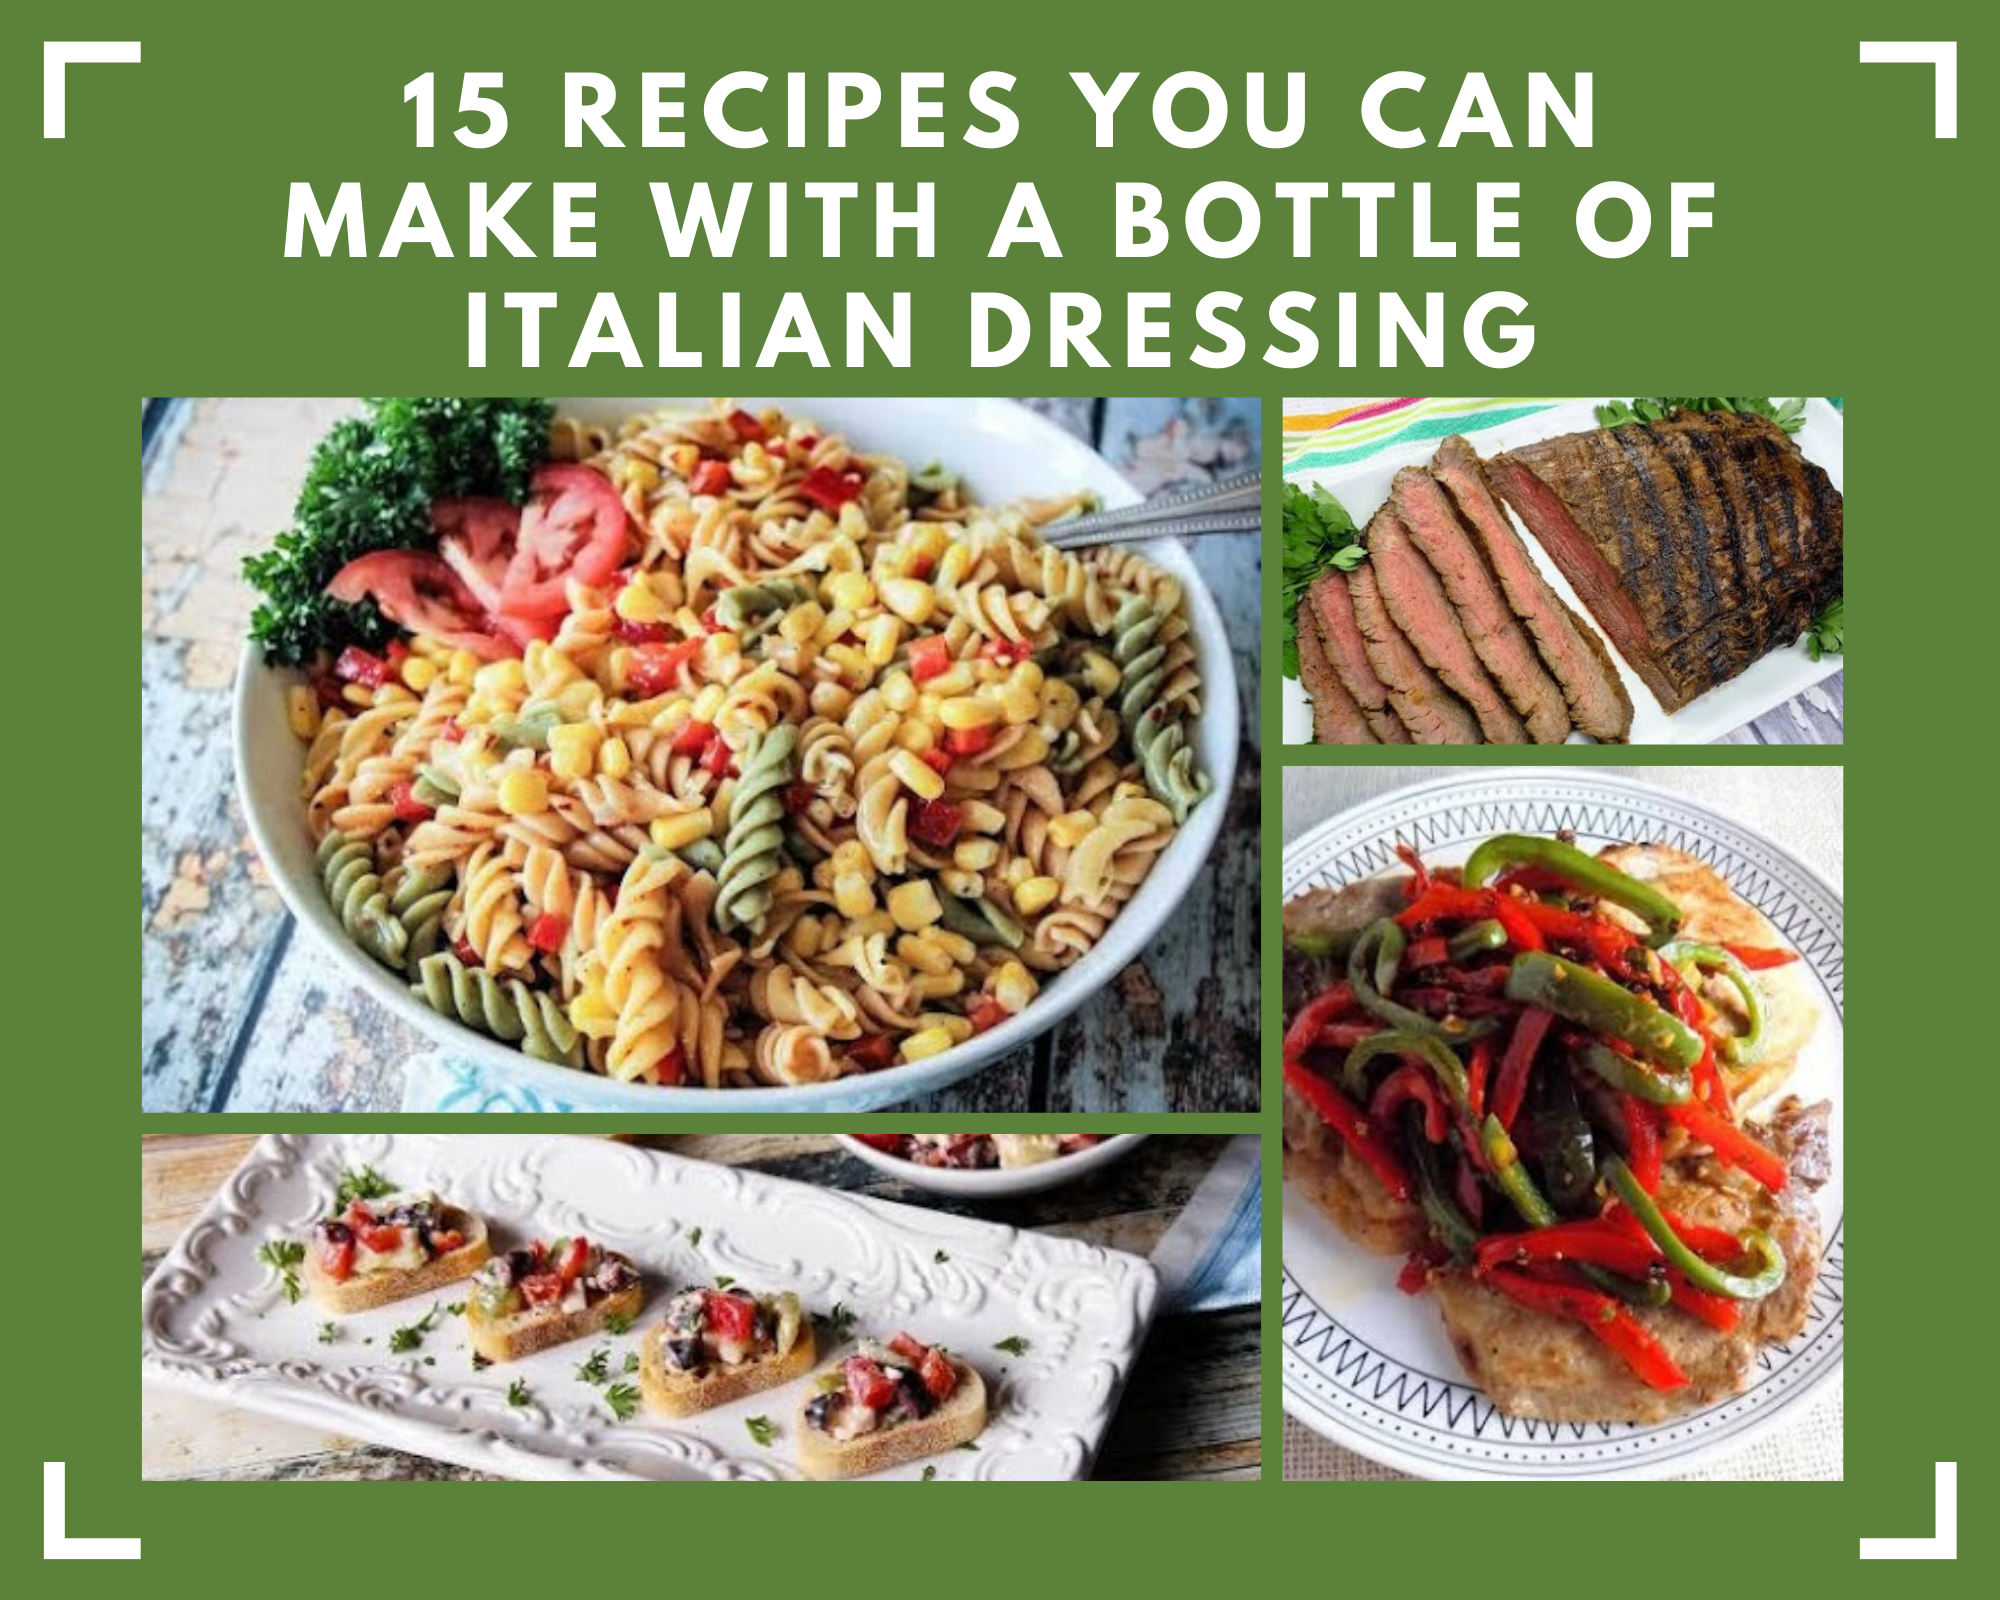 Italian dressing makes pasta salad, steak and bruschetta recipes the best